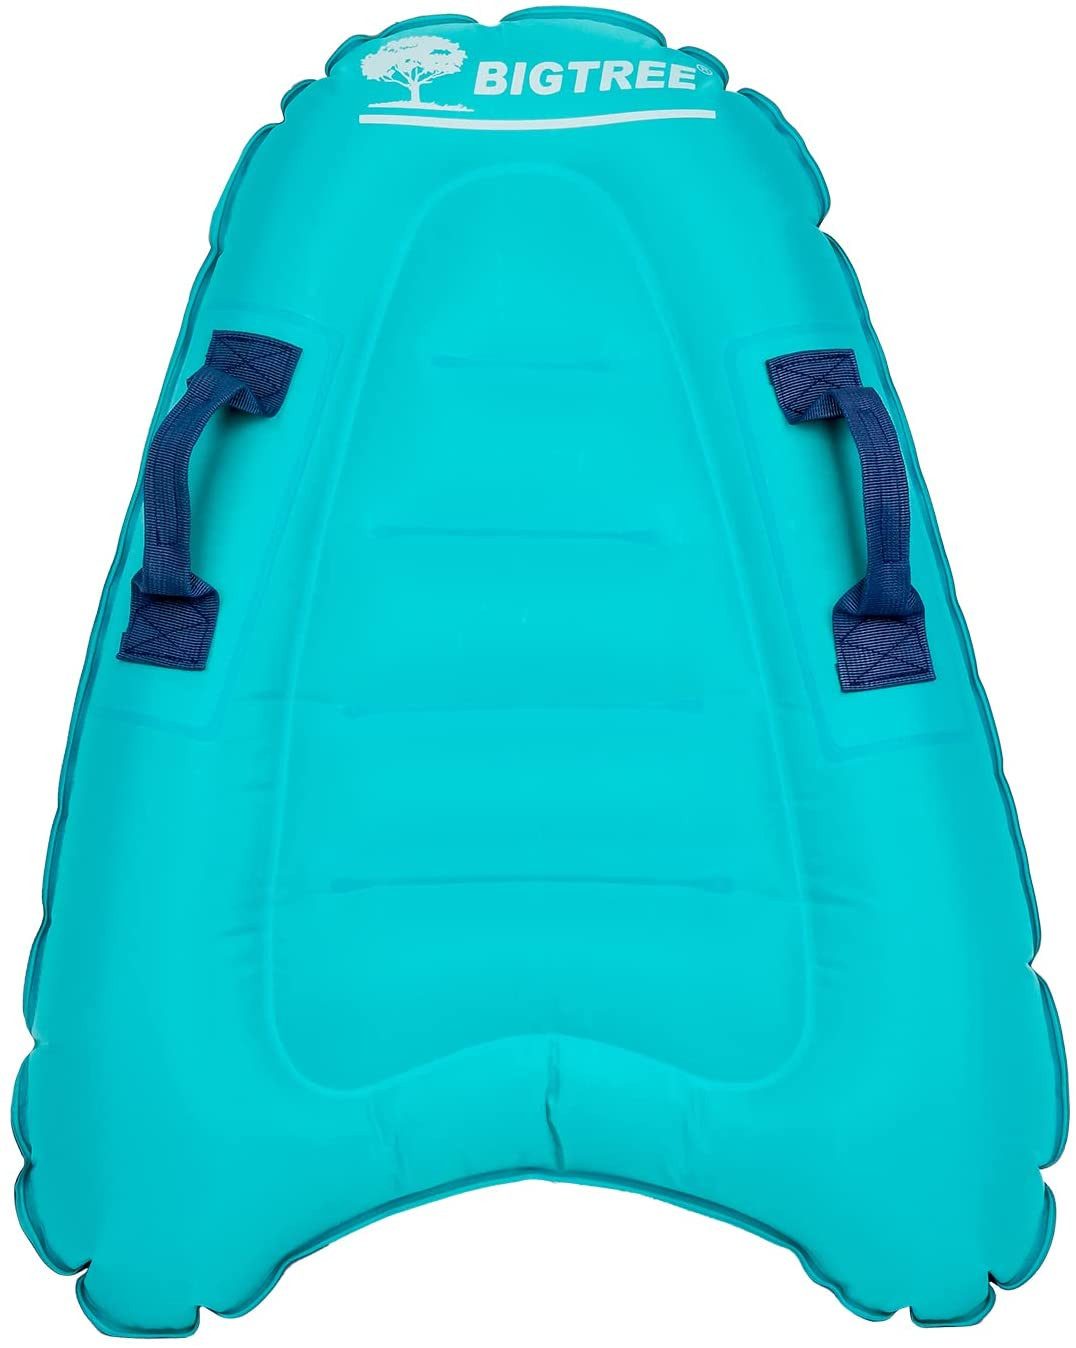 KAHOO Inflatable SUP-Board Aufblasbares Bodyboard, 52x14x70cm, Schwimmhilfe